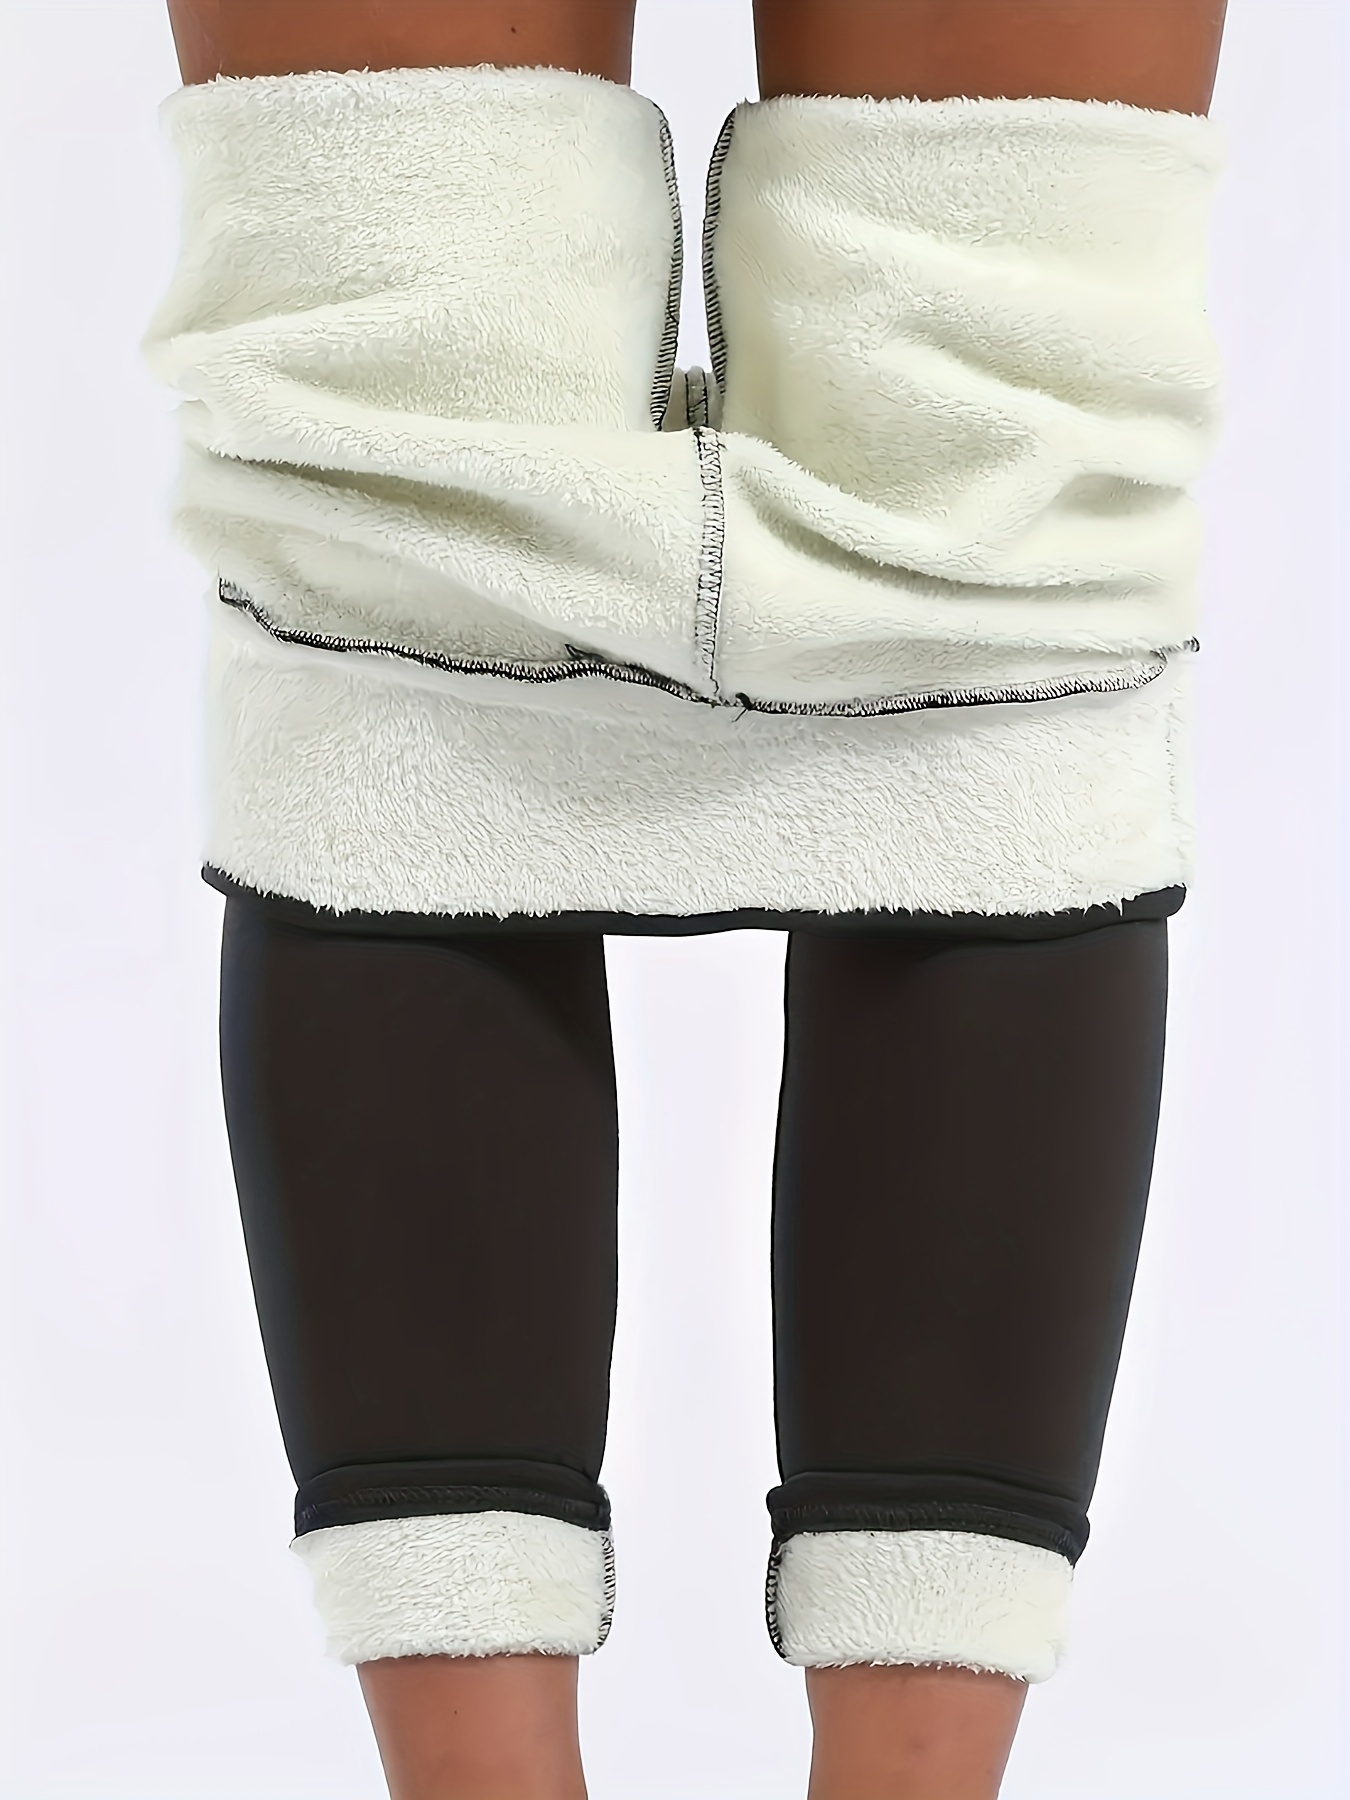  CHRLEISURE Womens Winter Warm Fleece Lined Leggings - Thick  Velvet Tights Thermal Pants